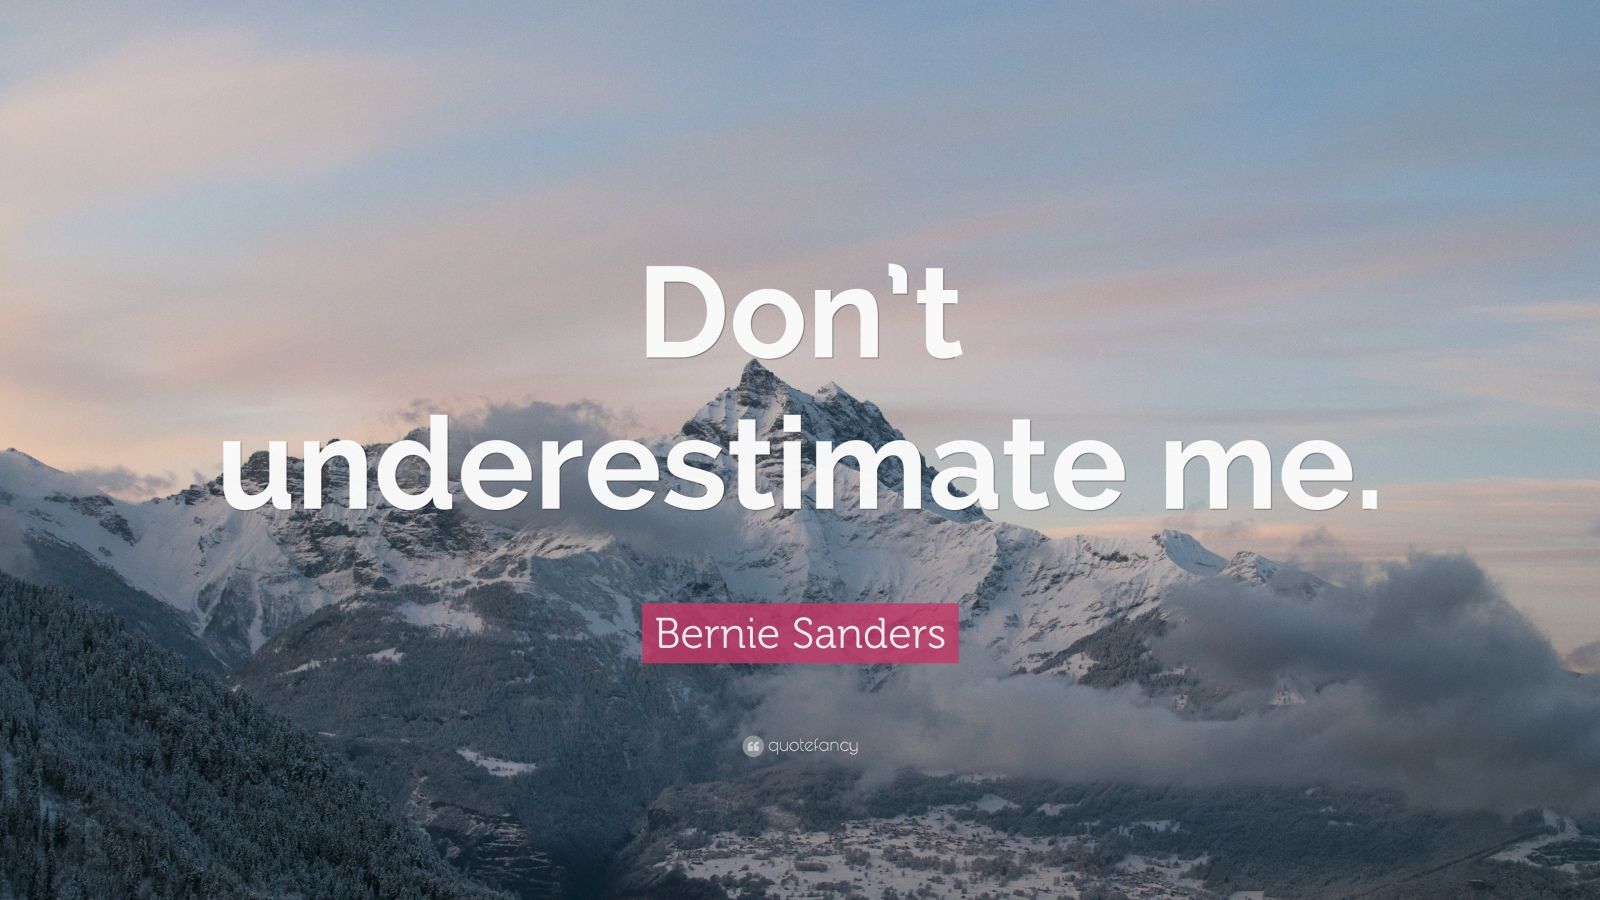 Bernie Sanders Quote: "Don't underestimate me." (12 wallpapers) - Quotefancy